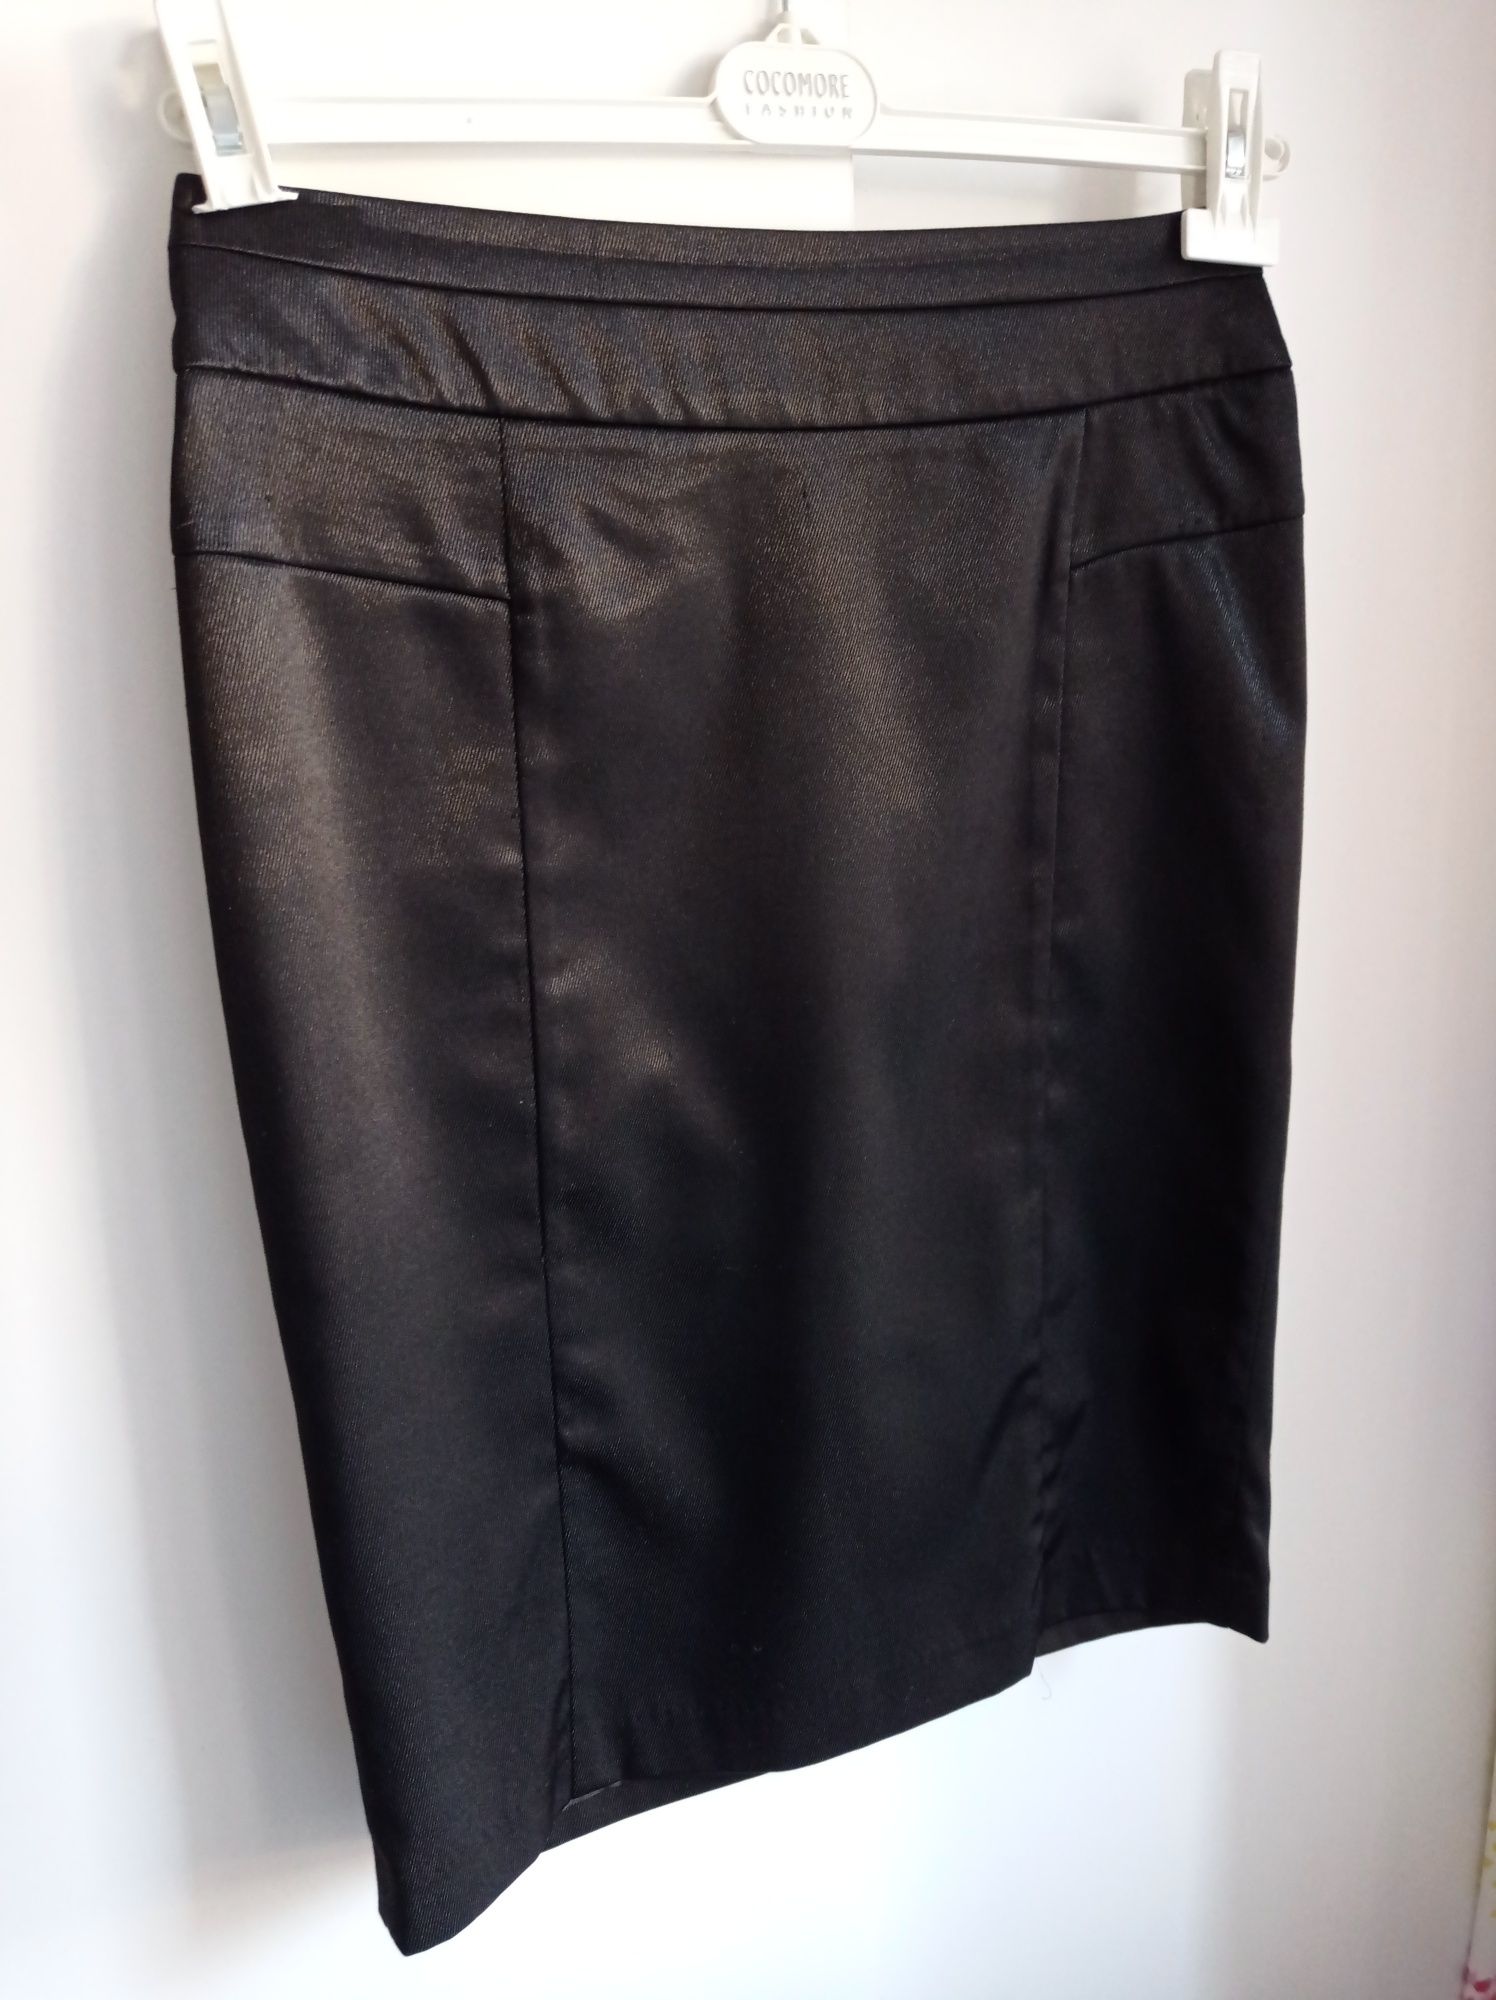 38 M spódnica czarna ołówkowa Reserved elegancka do pracy na egzamin